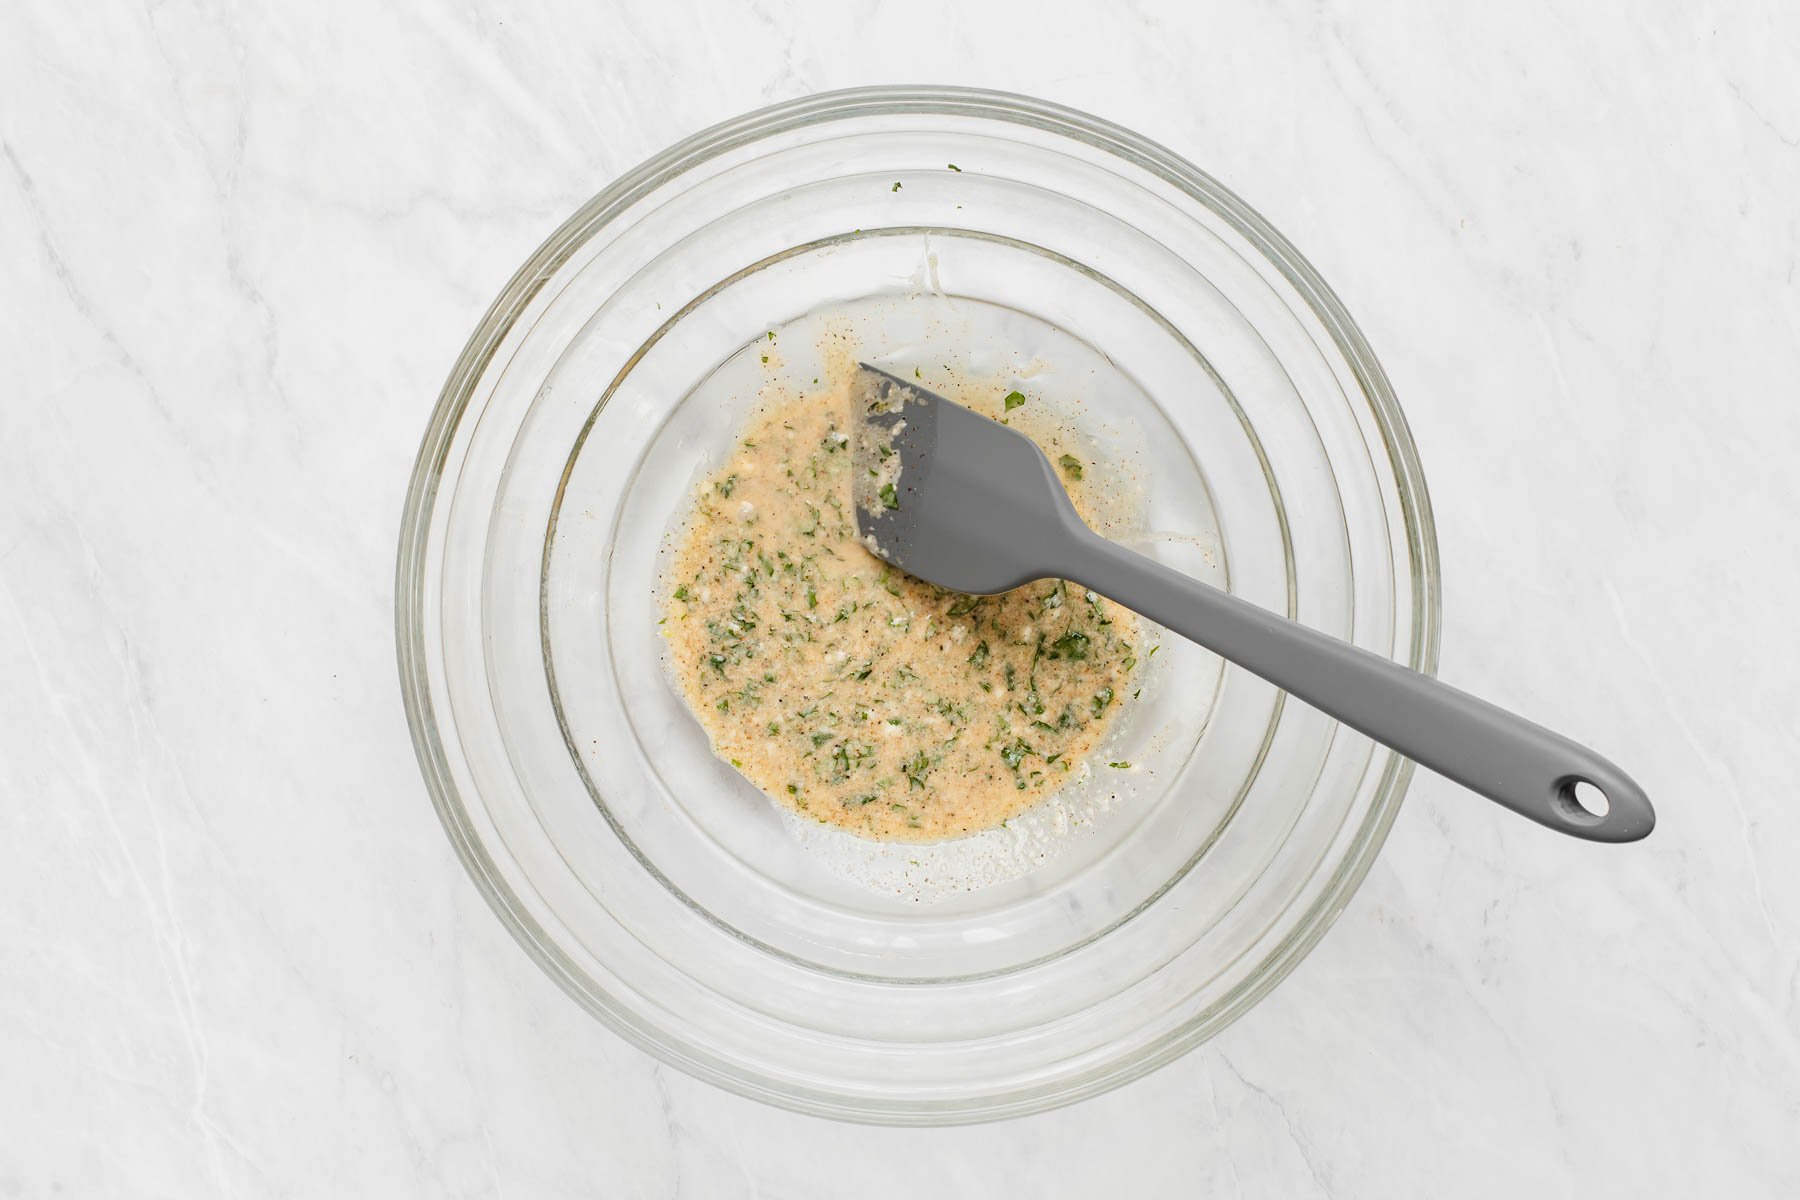 Creamy dressing with cilantro flecks in a clear glass bowl with spatula.